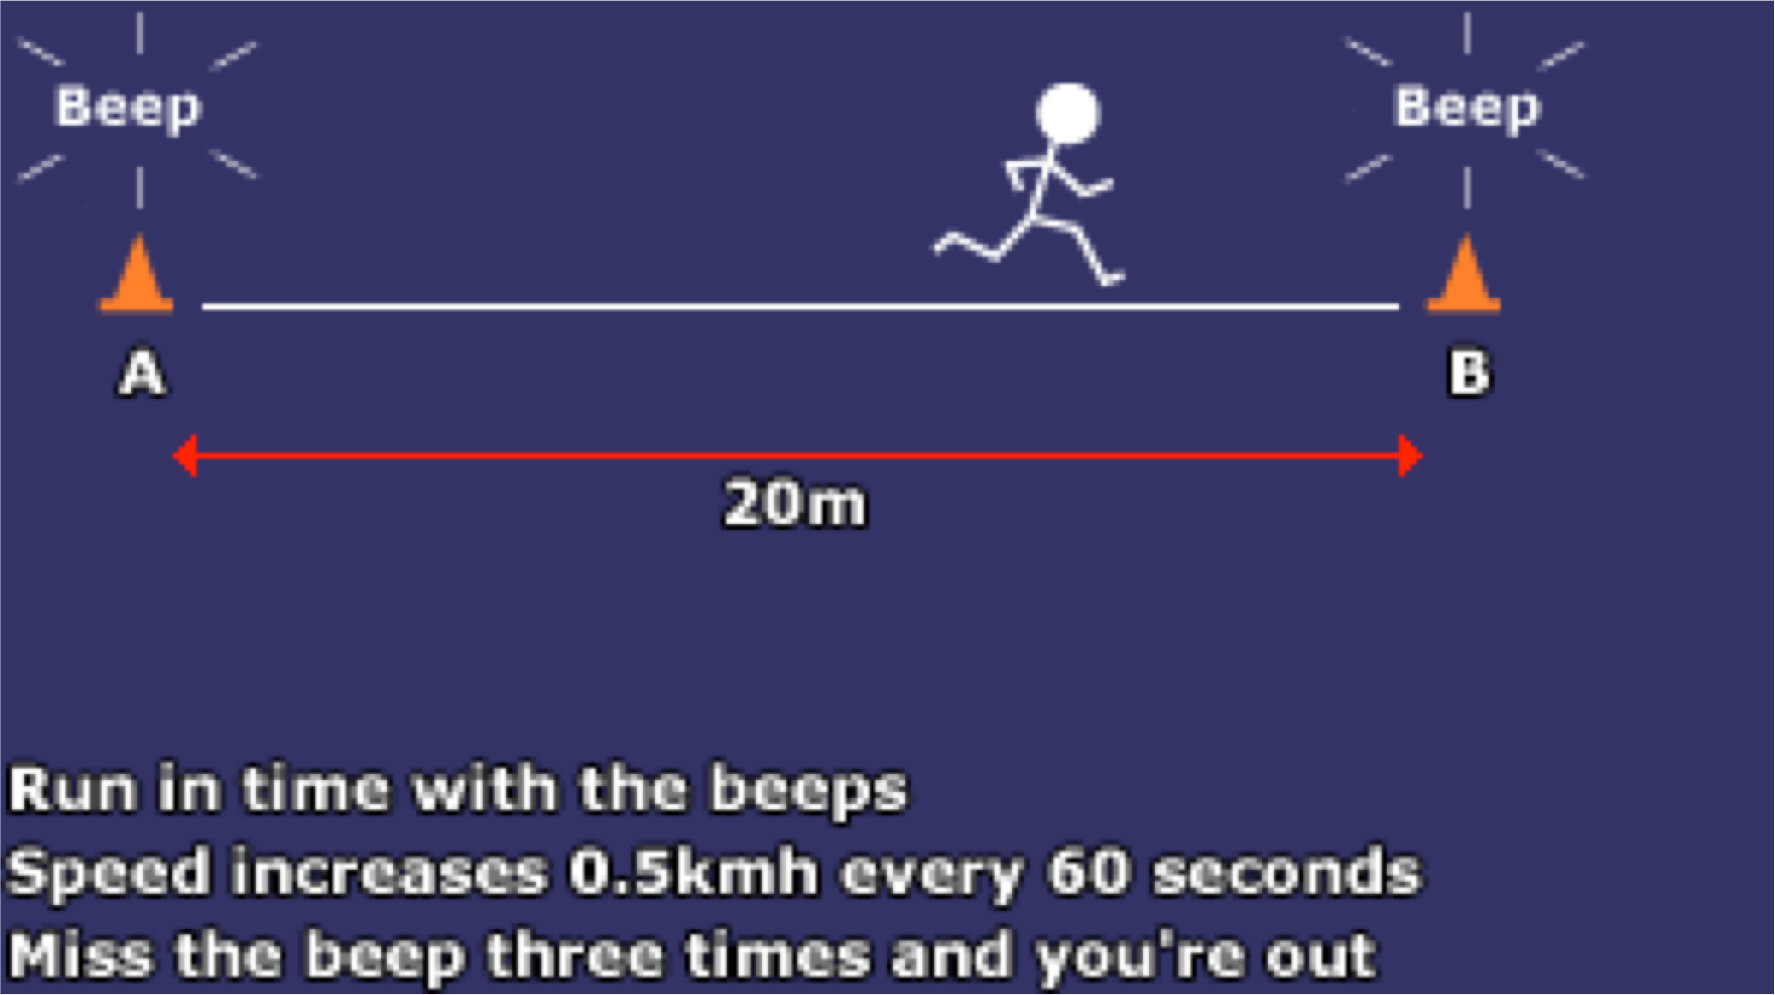 beep test distance in feet